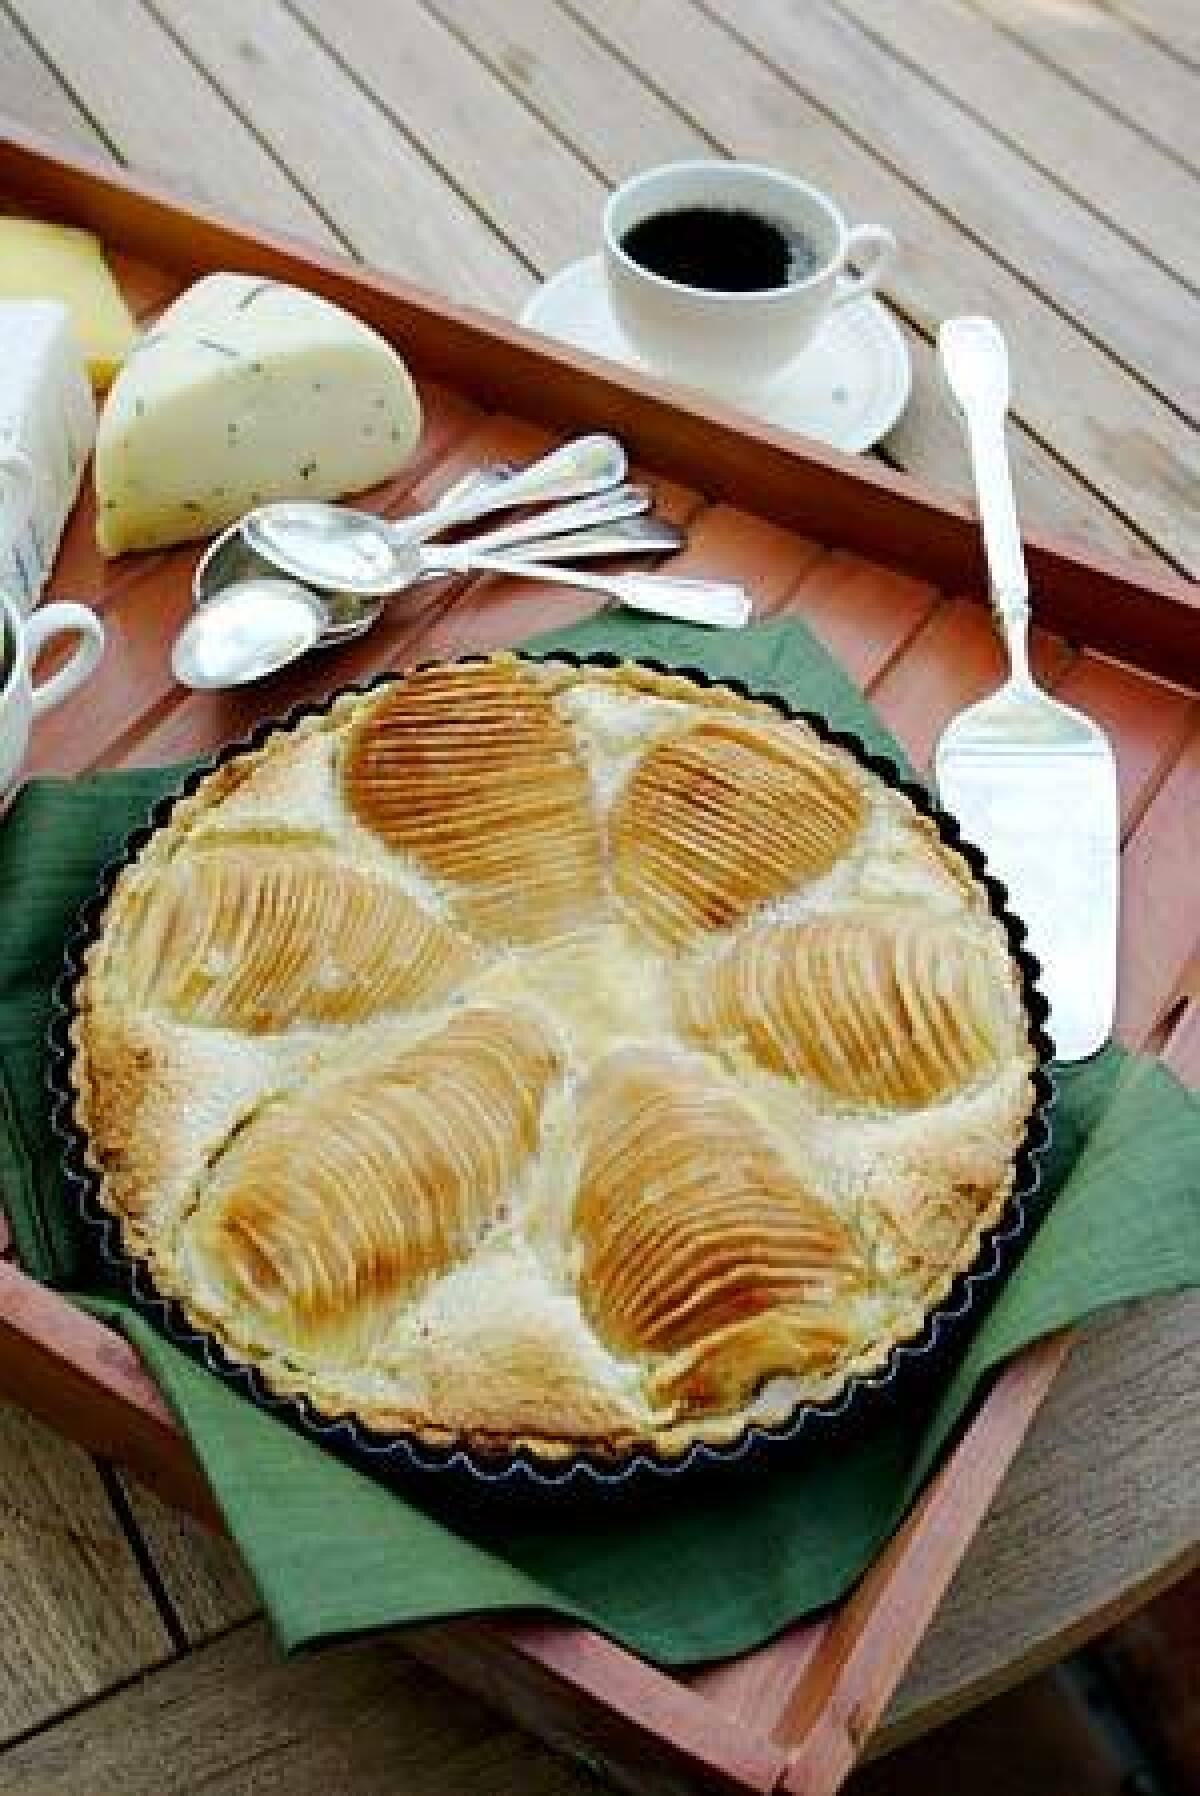 THE DESSERT: Pear frangipane tart showcases Bartlett pears in an orange-and-almond filling.